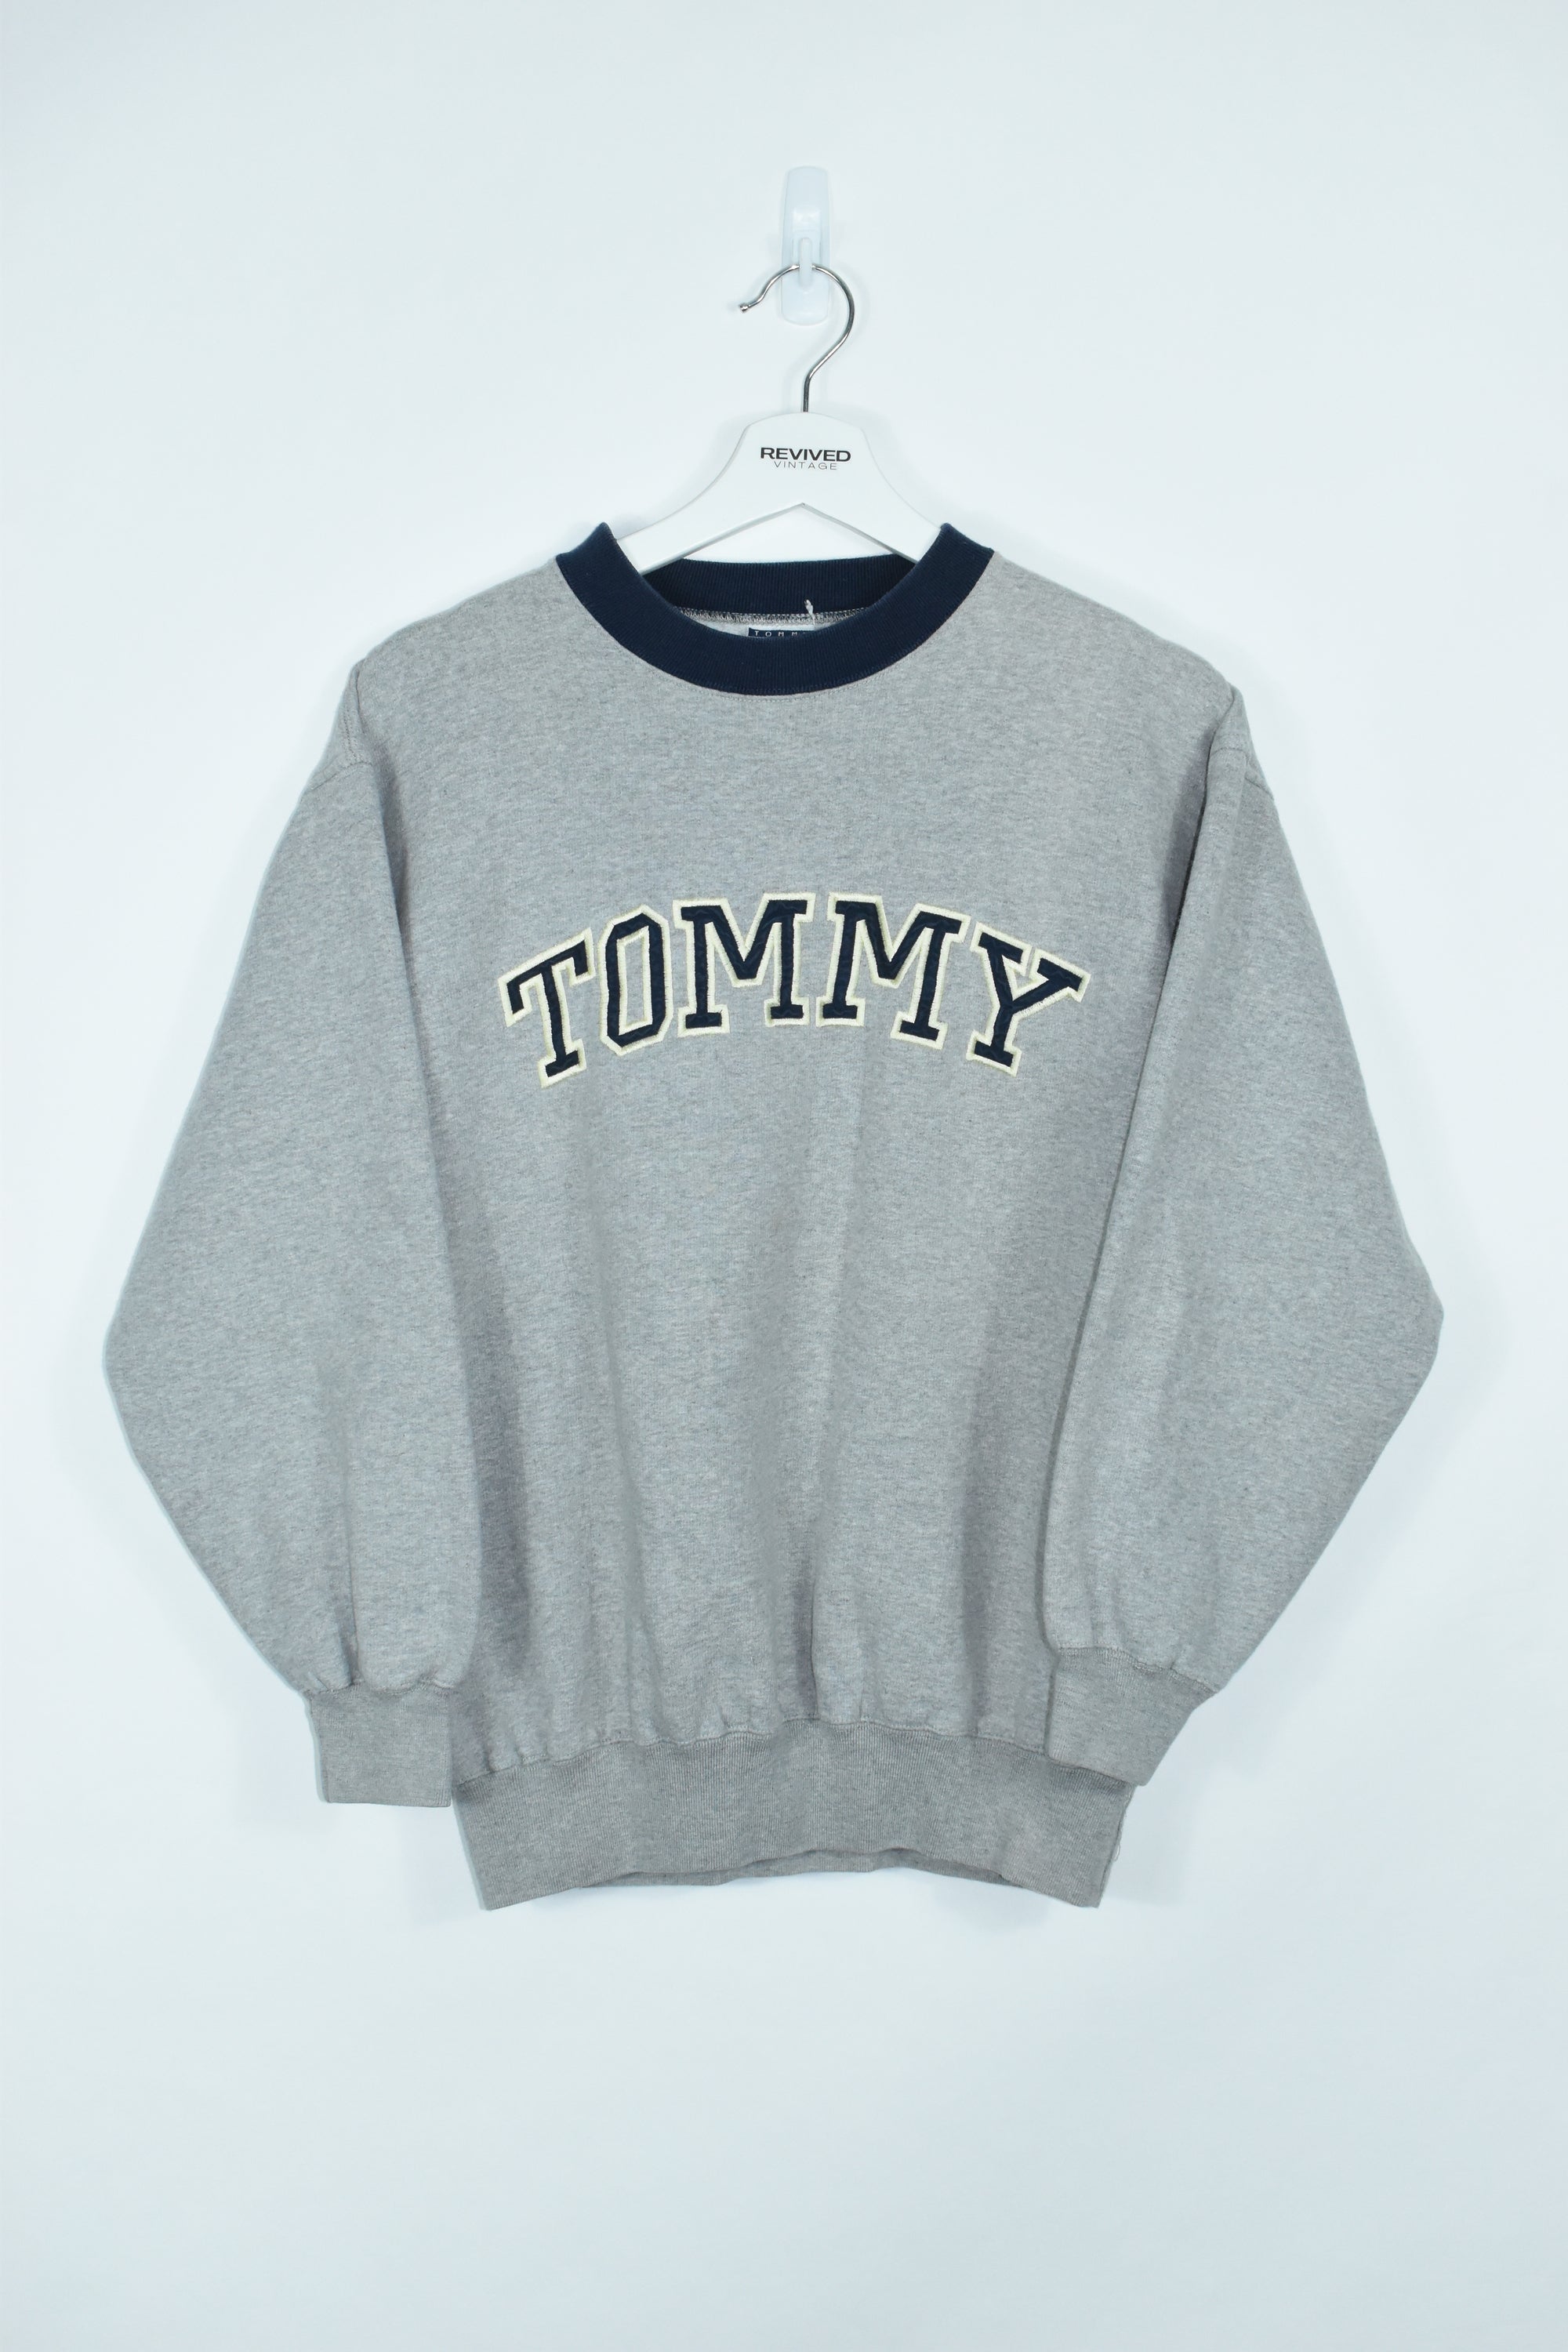 Vintage Tommy Hilfiger Embroidery Sweatshirt Womens MEDIUM